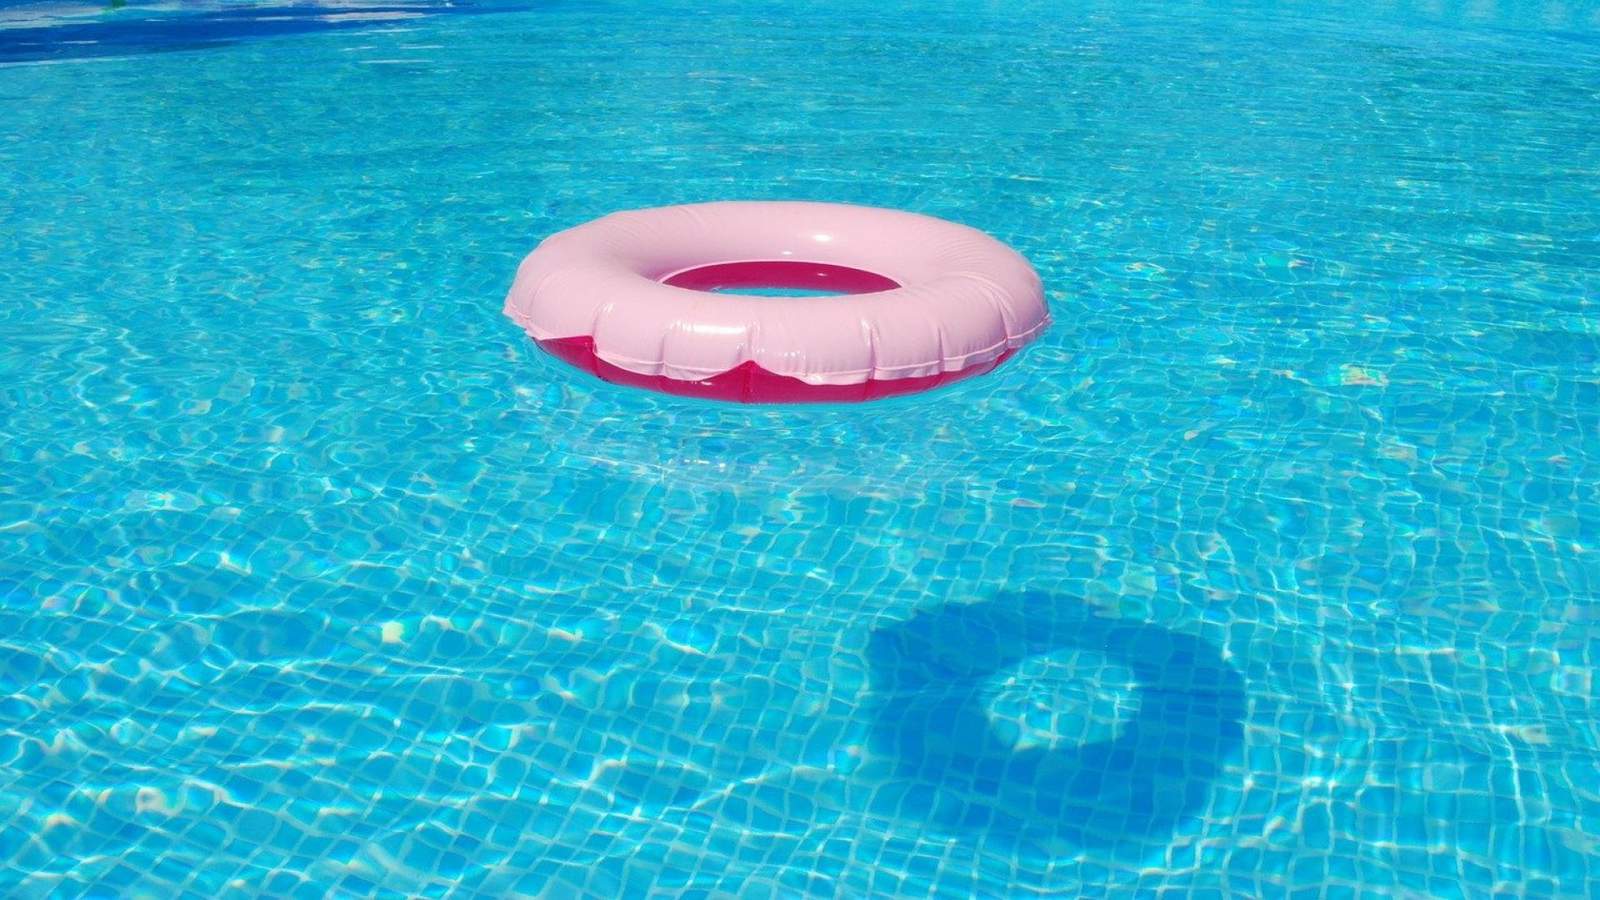 When will San Antonio pools reopen?